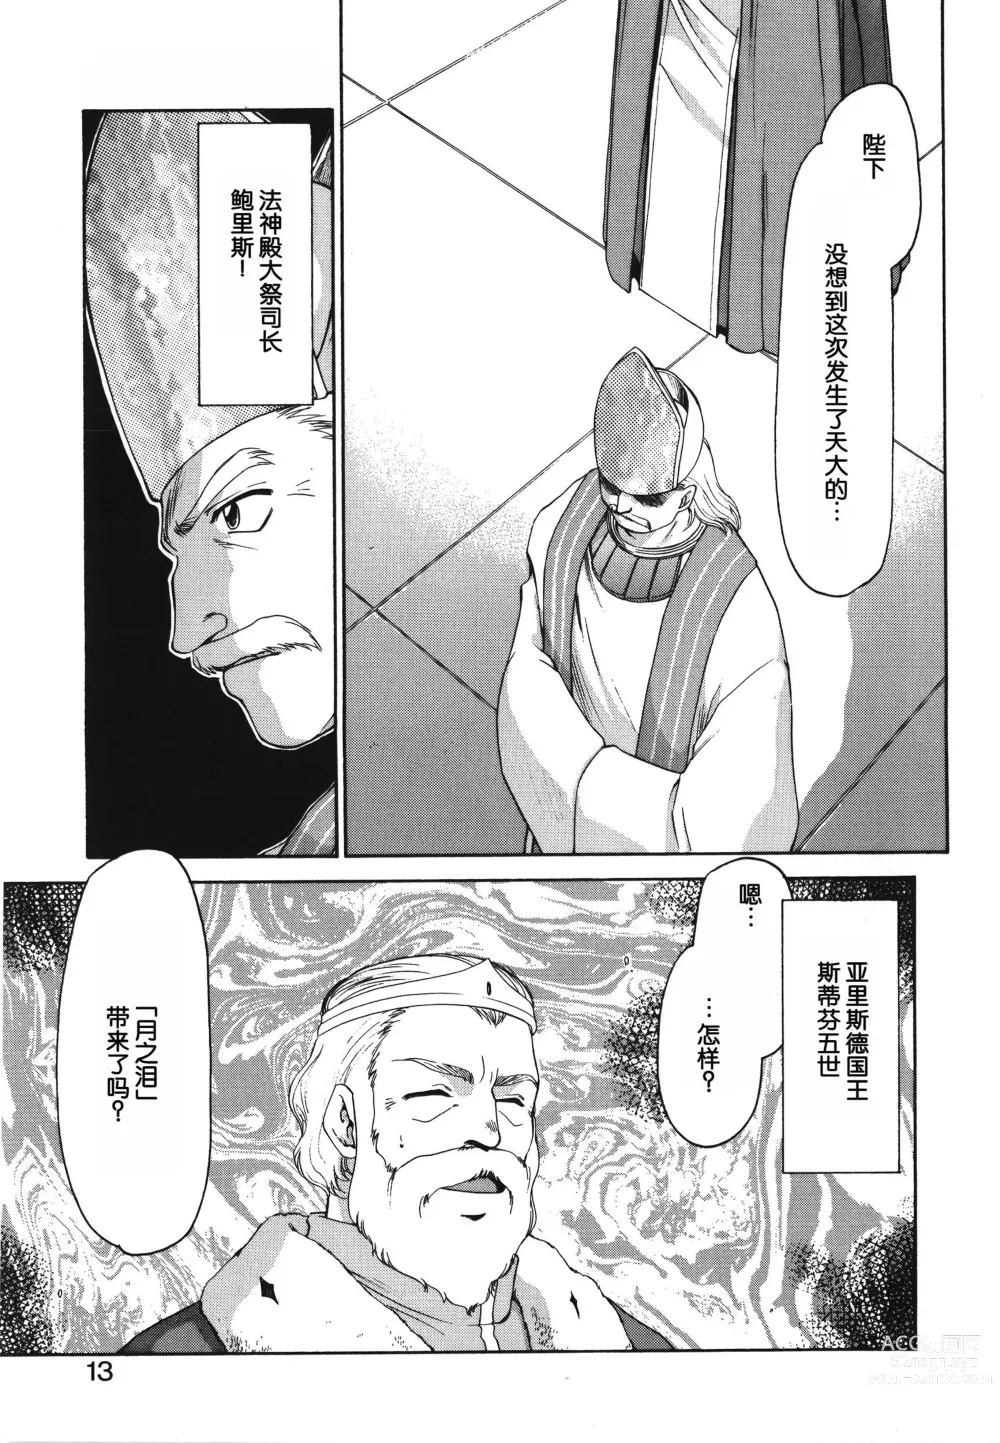 Page 13 of manga Bad Moon...